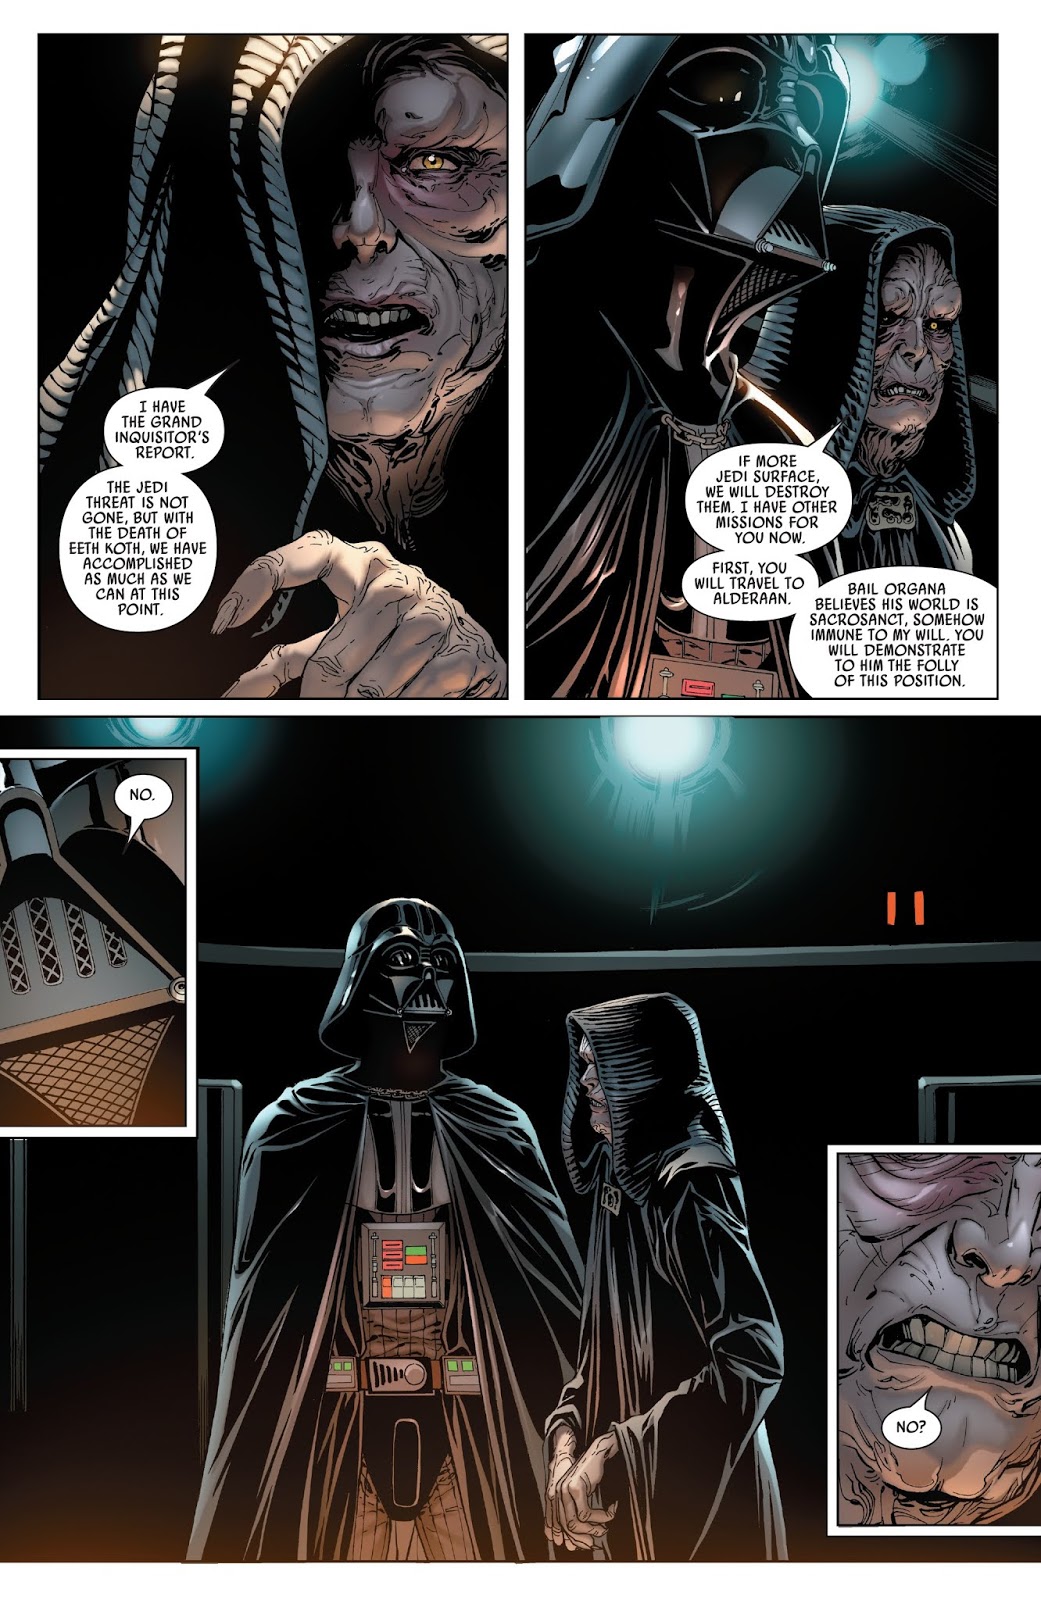 Darth Vader Wants Mustafar As His Personal Planet